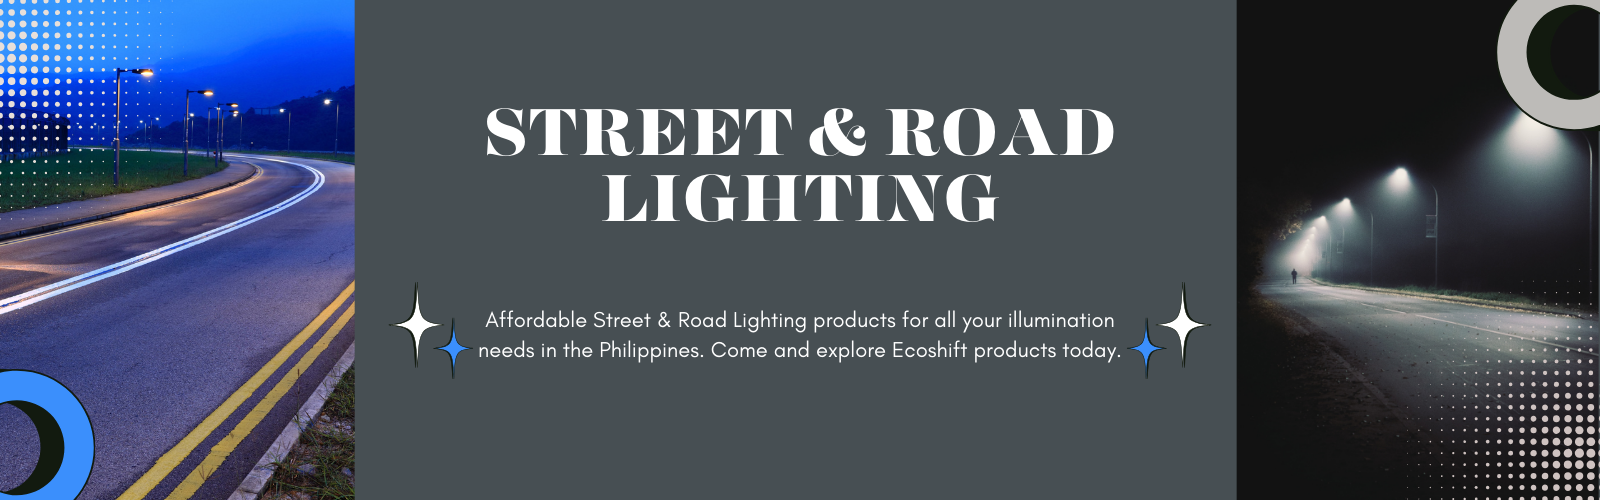 Street and Road Lighting